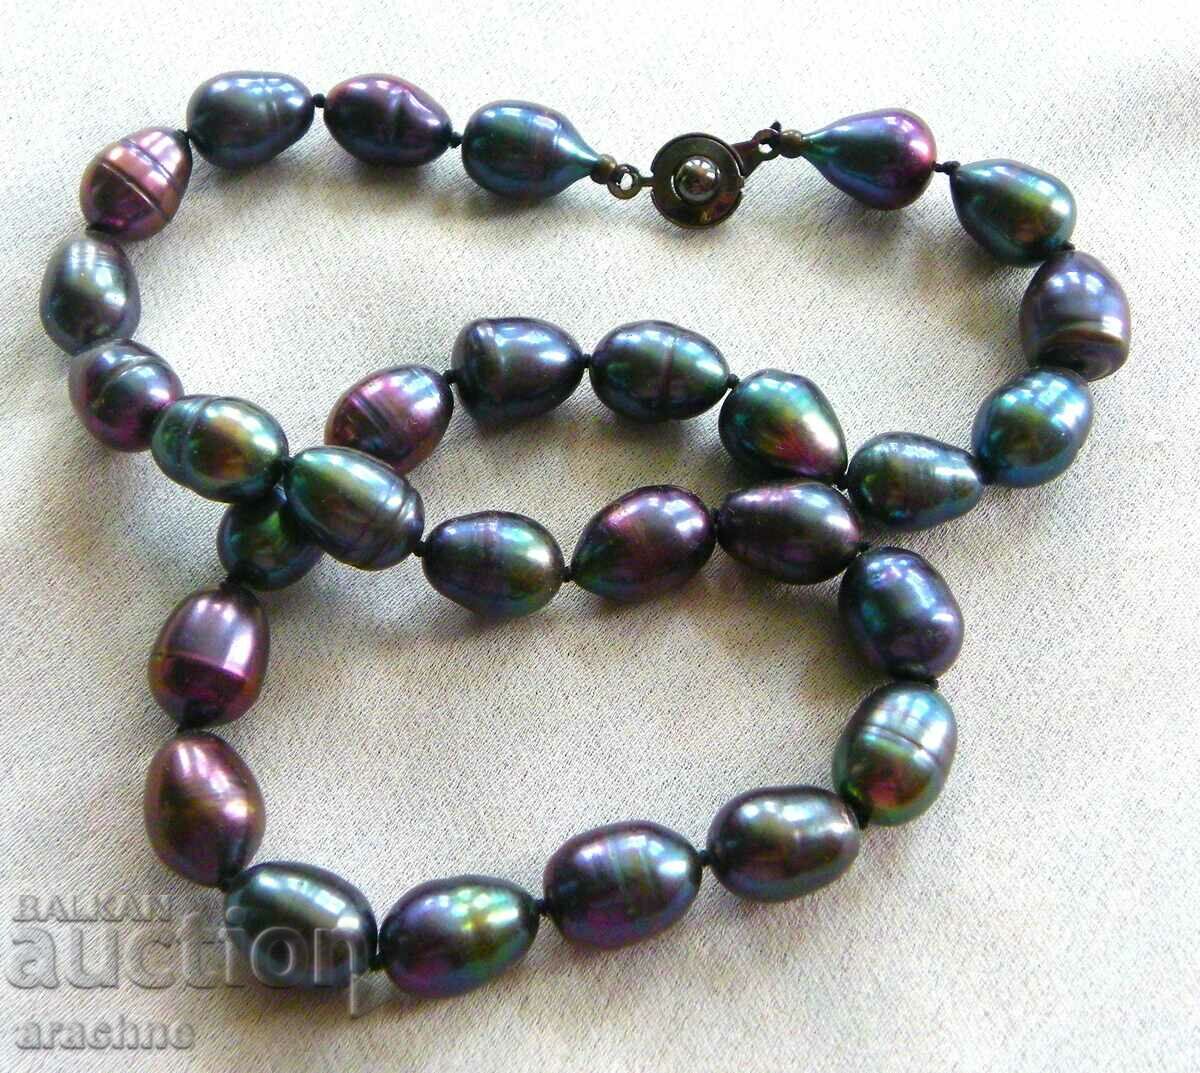 Korean necklace of large dark pearls